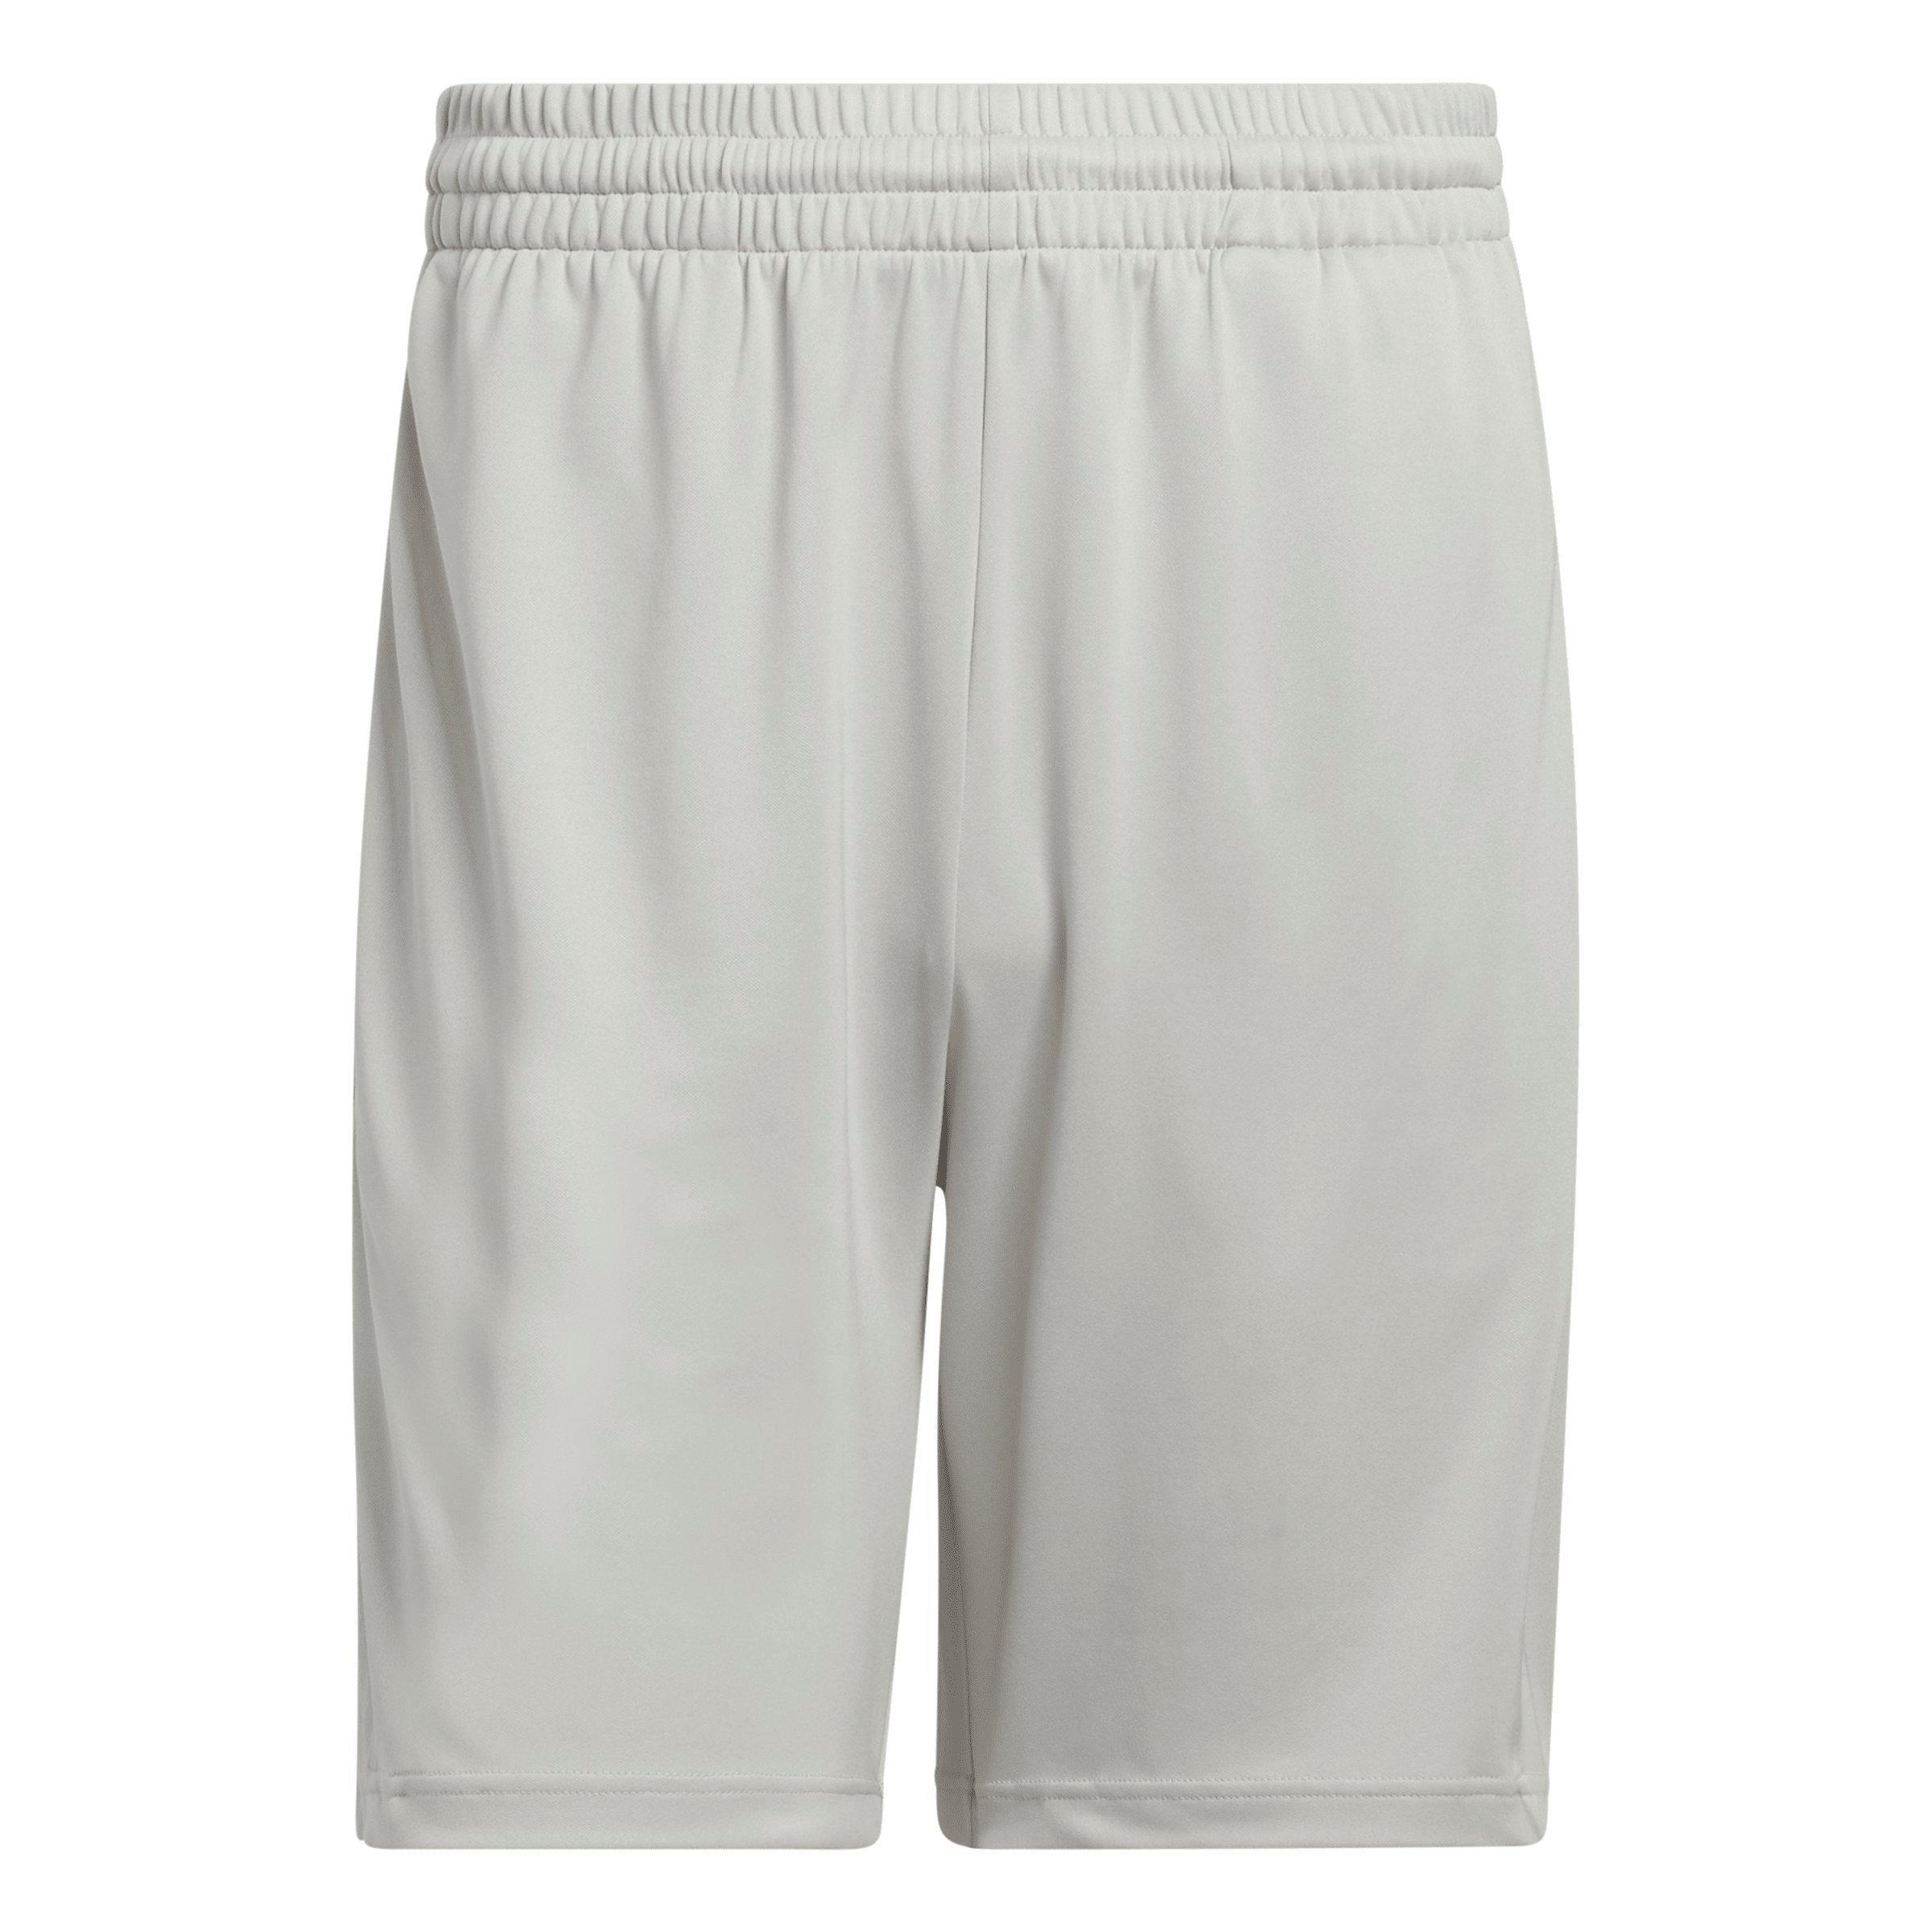 adidas Men's Legends 3-Stripes Basketball Shorts